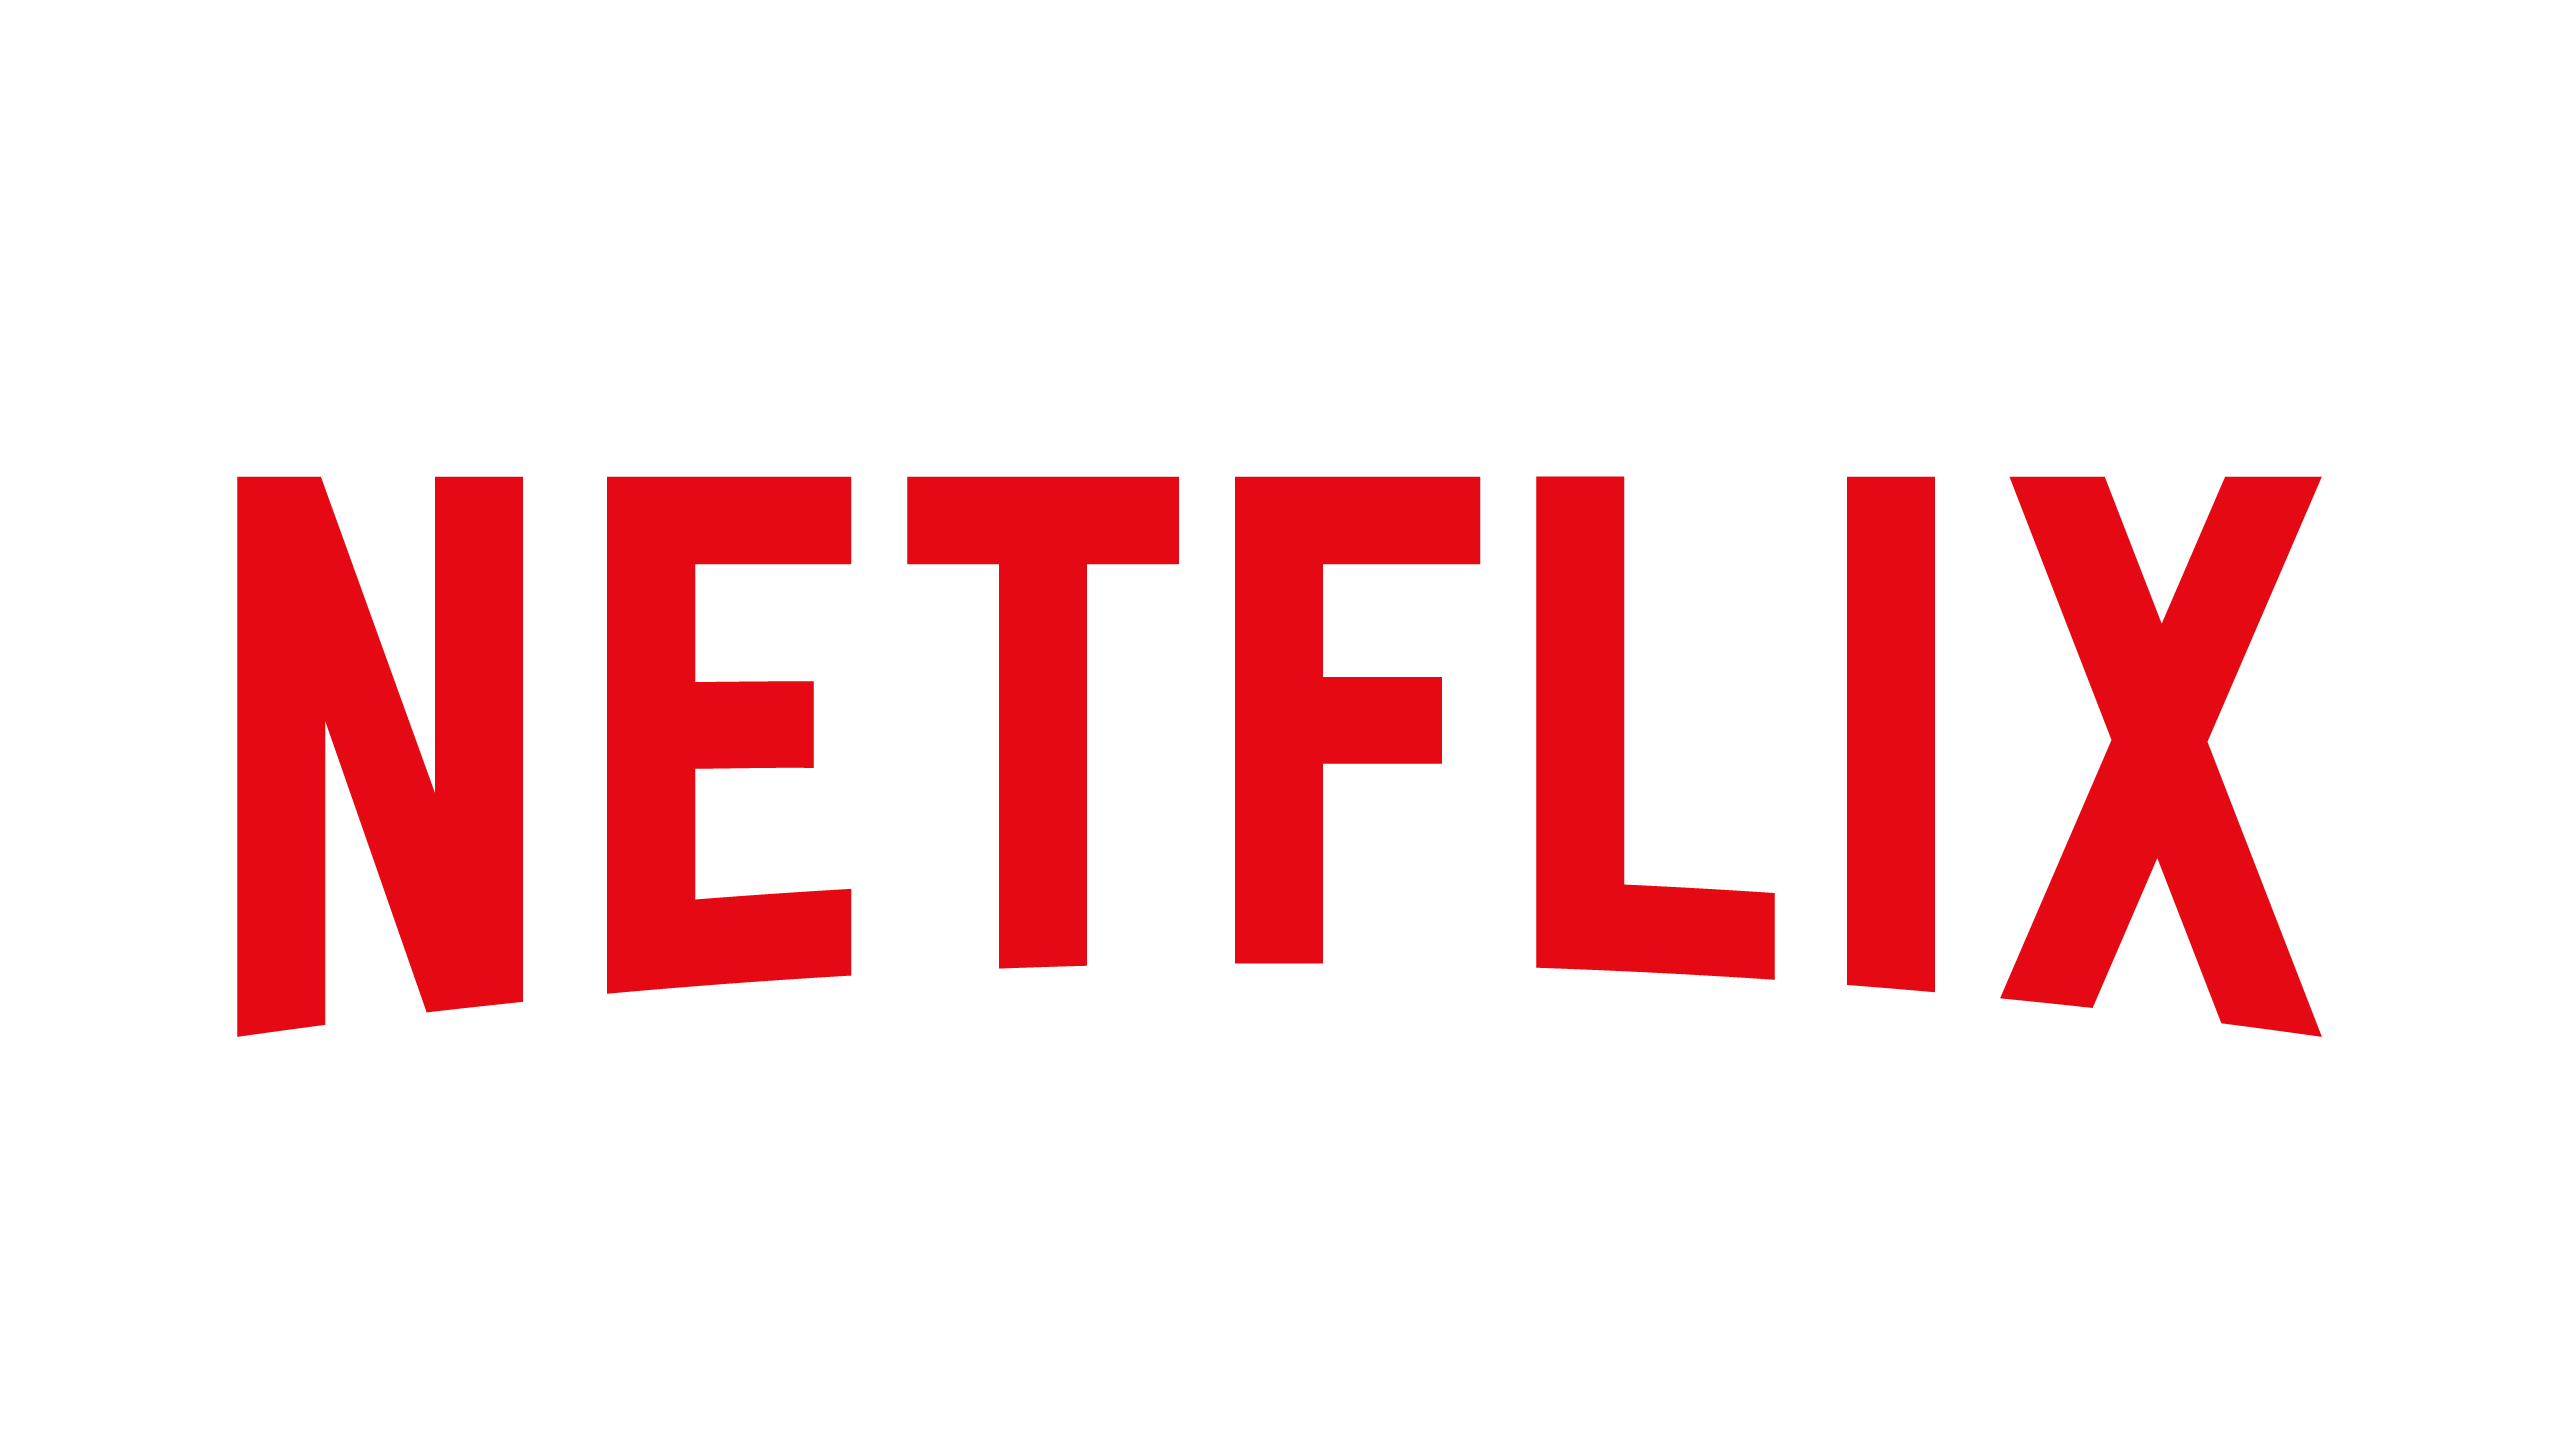 Netflix Petitions Against the Comcast/TWC Merger